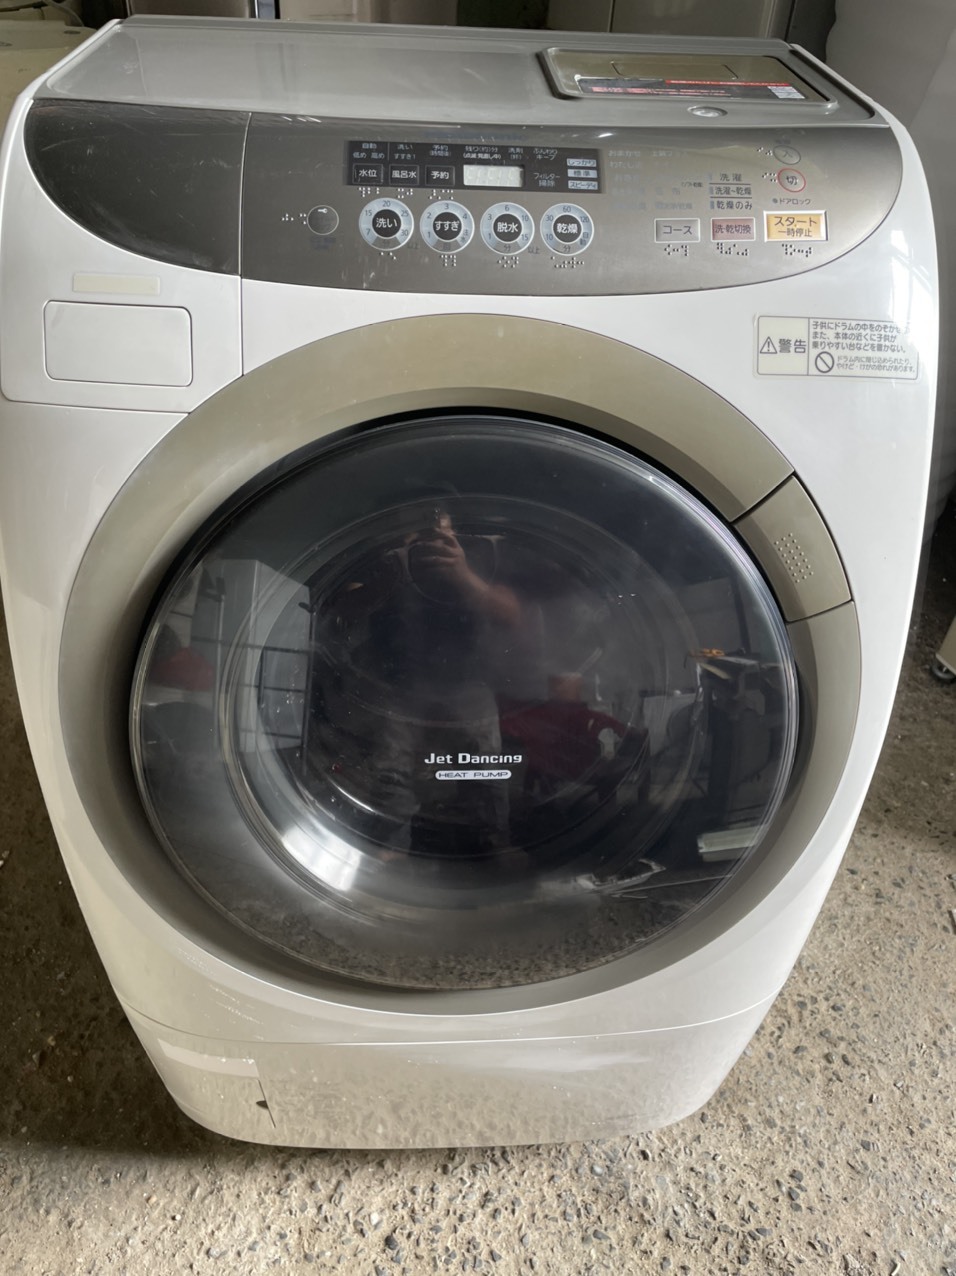 Máy giặt Panasonic NA-VR2600 giặt 9kg sấy 6kg